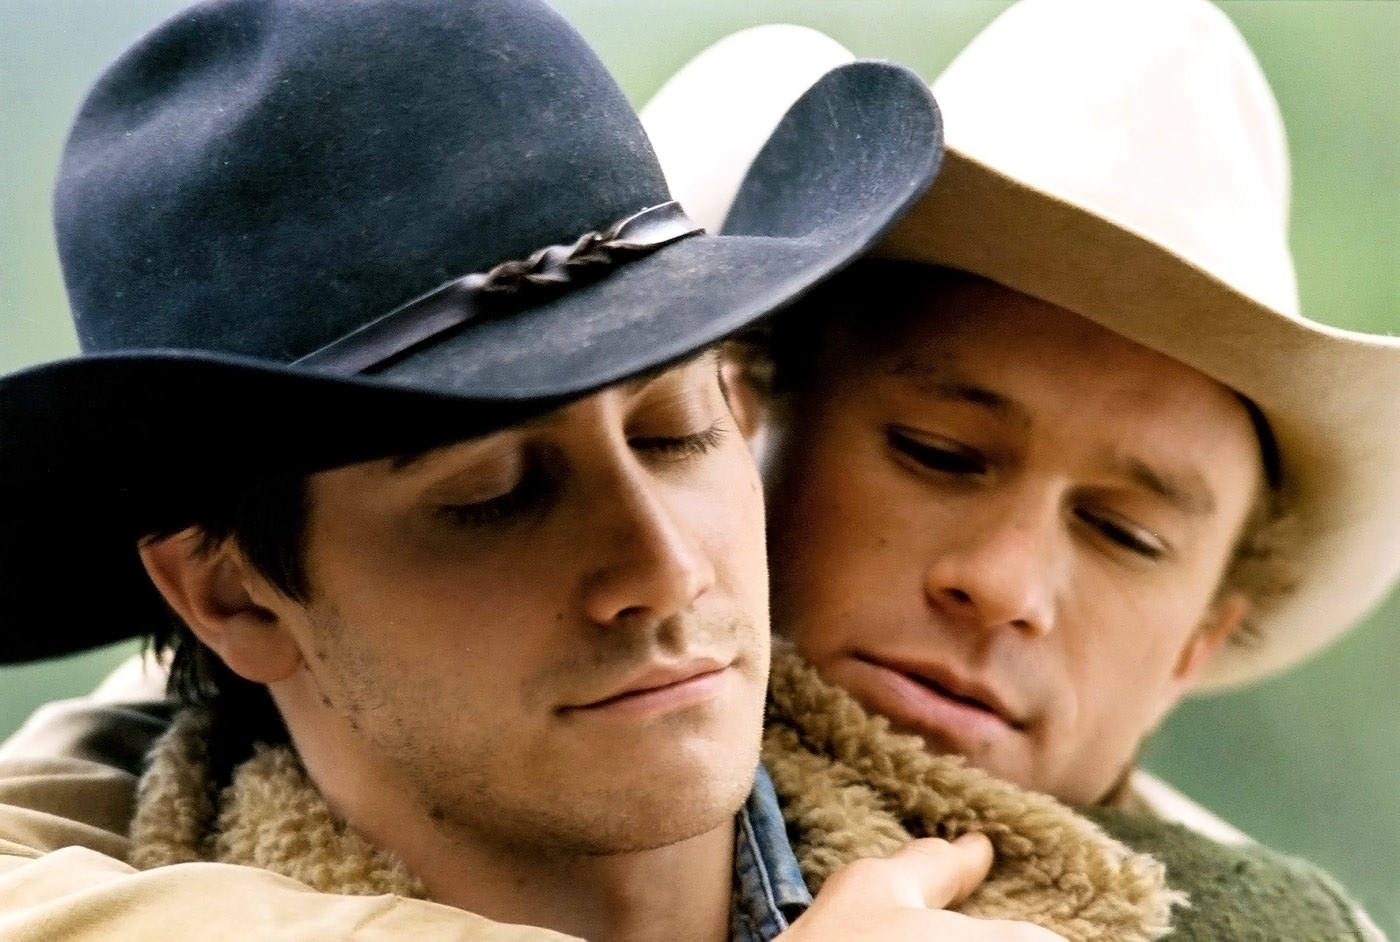 Heath Ledger hugging Jake Gyllenaal from behind, both wearing cowboy hats